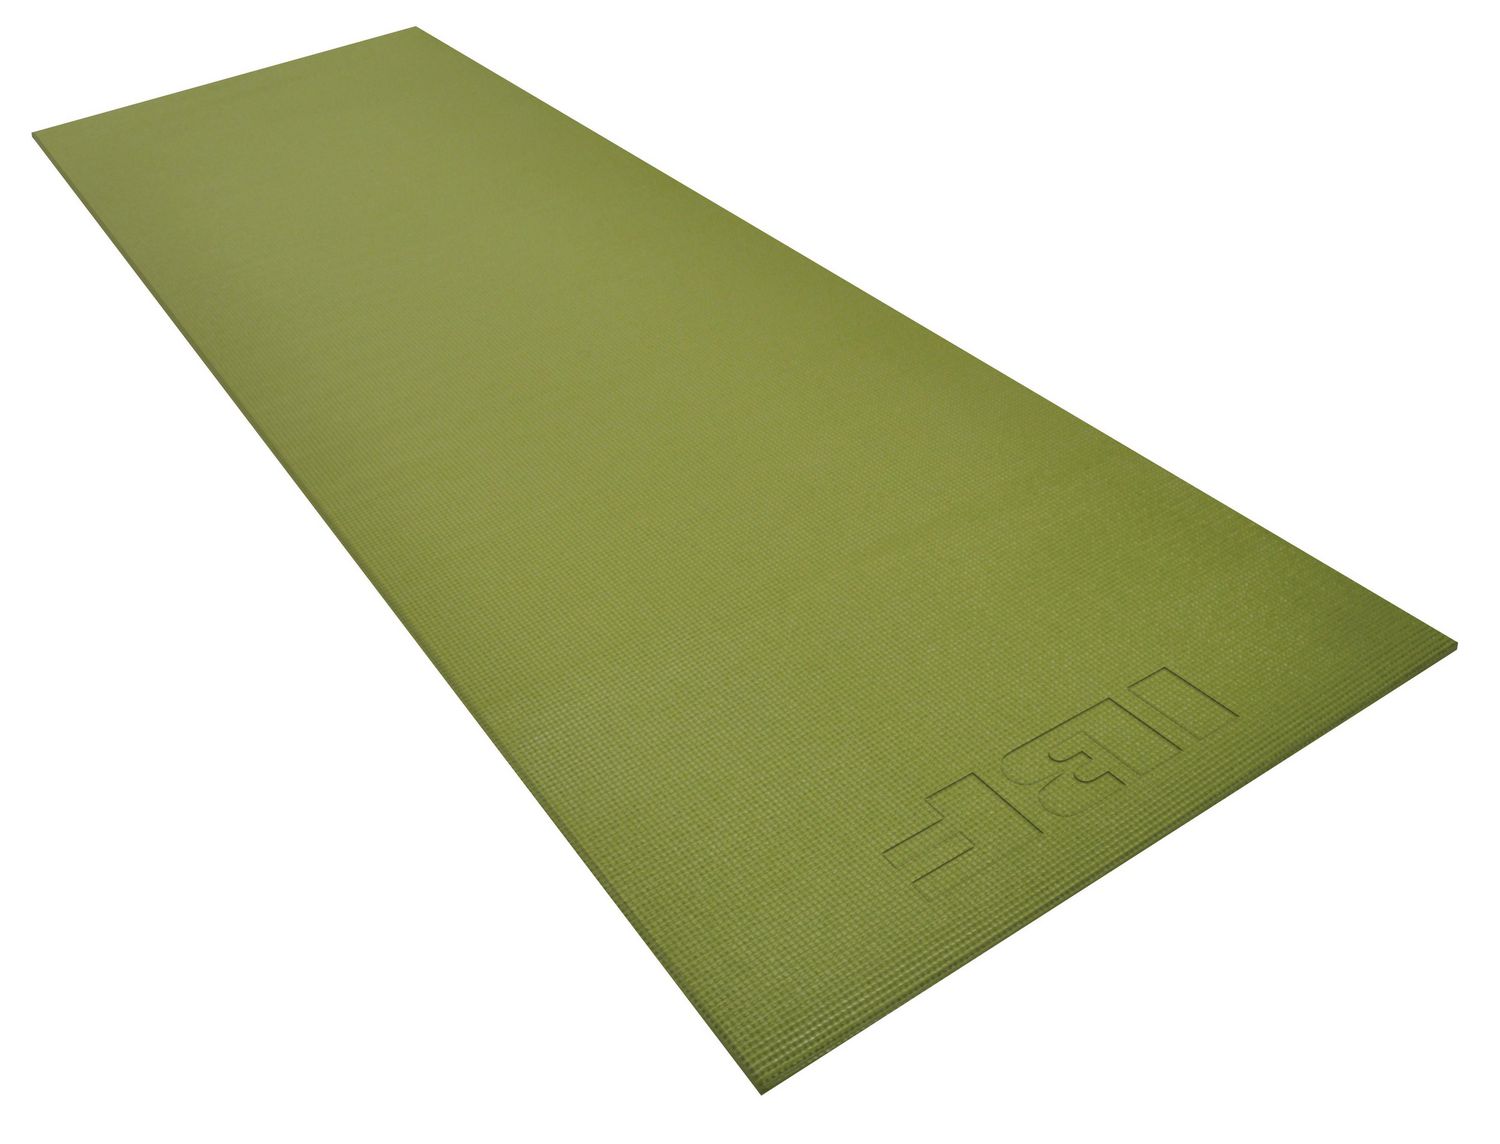 The Hello Fit Yoga Mat 68x 24x 4mm Green